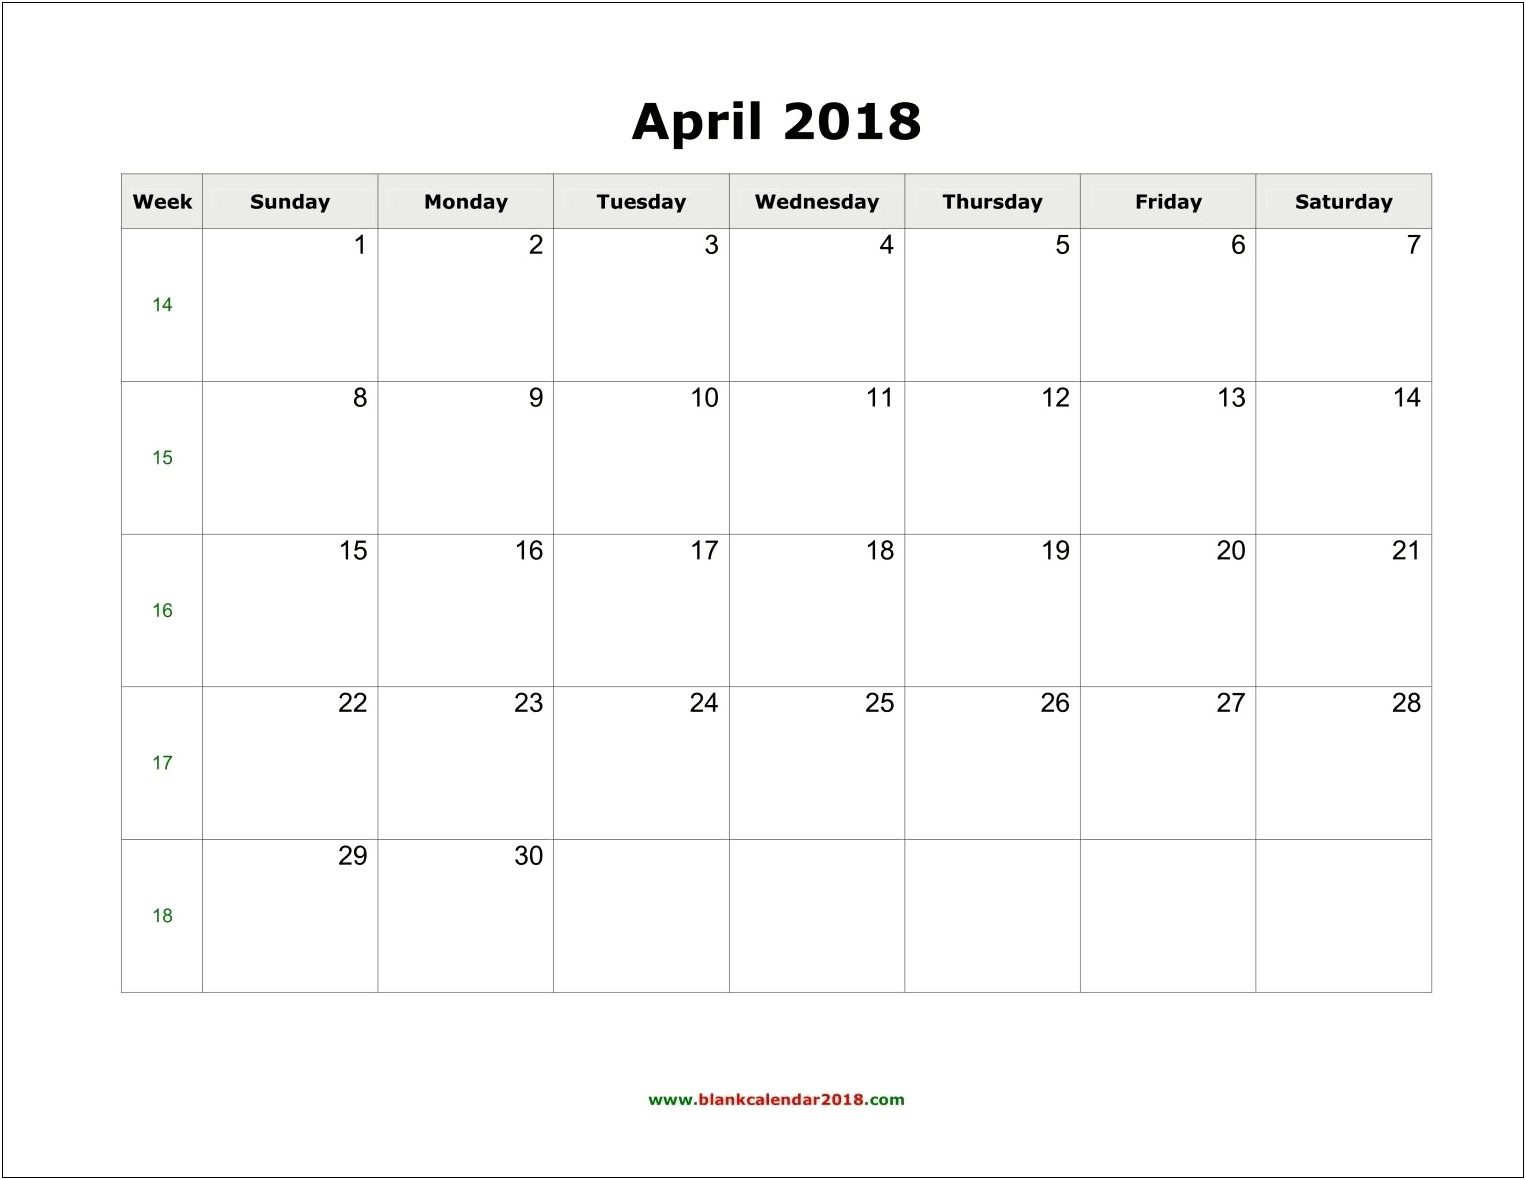 Free Calendar Template For April 2018